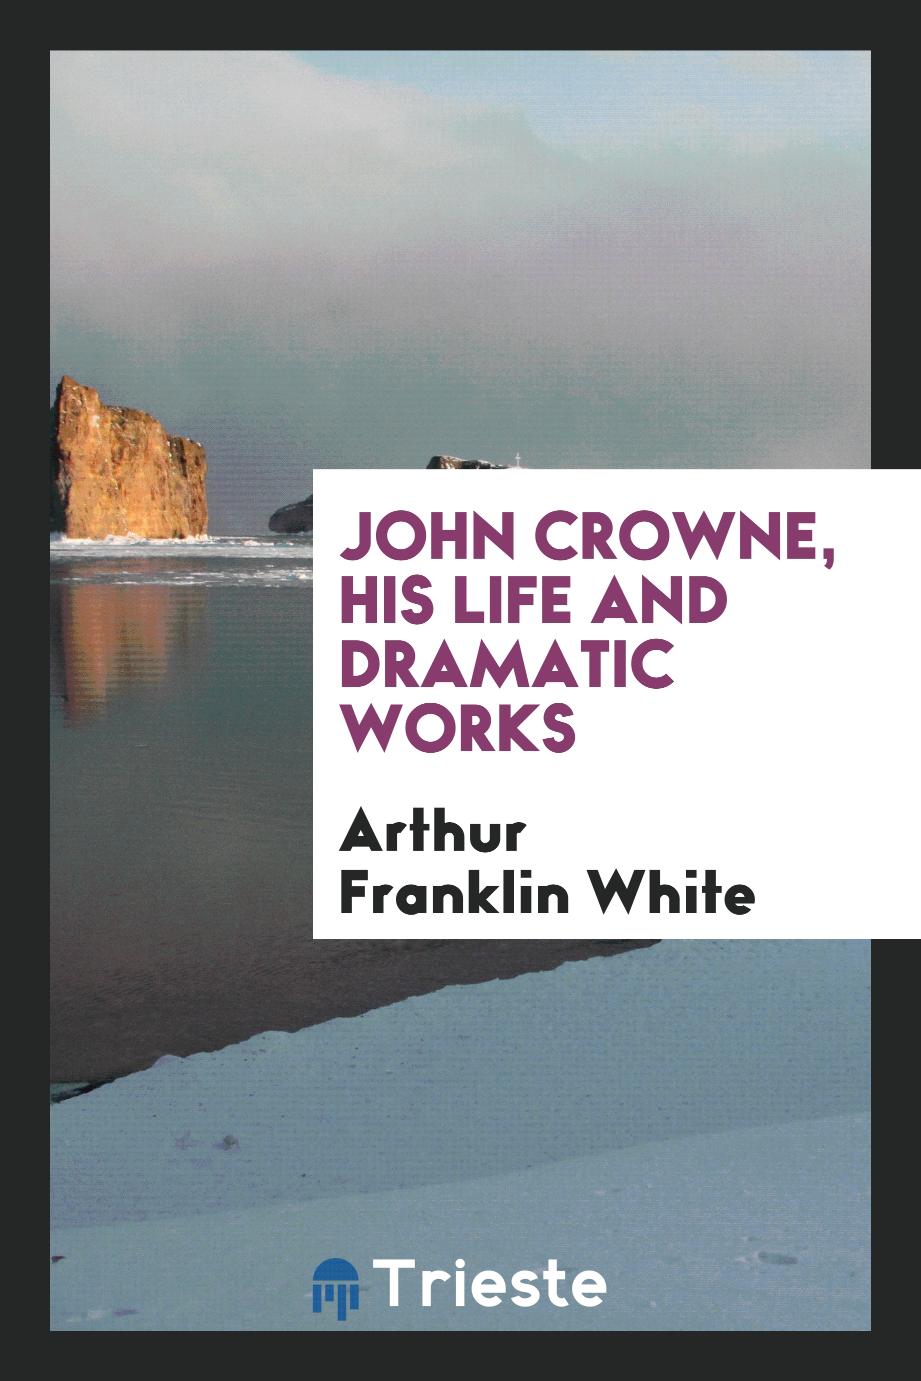 John Crowne, His Life and Dramatic Works